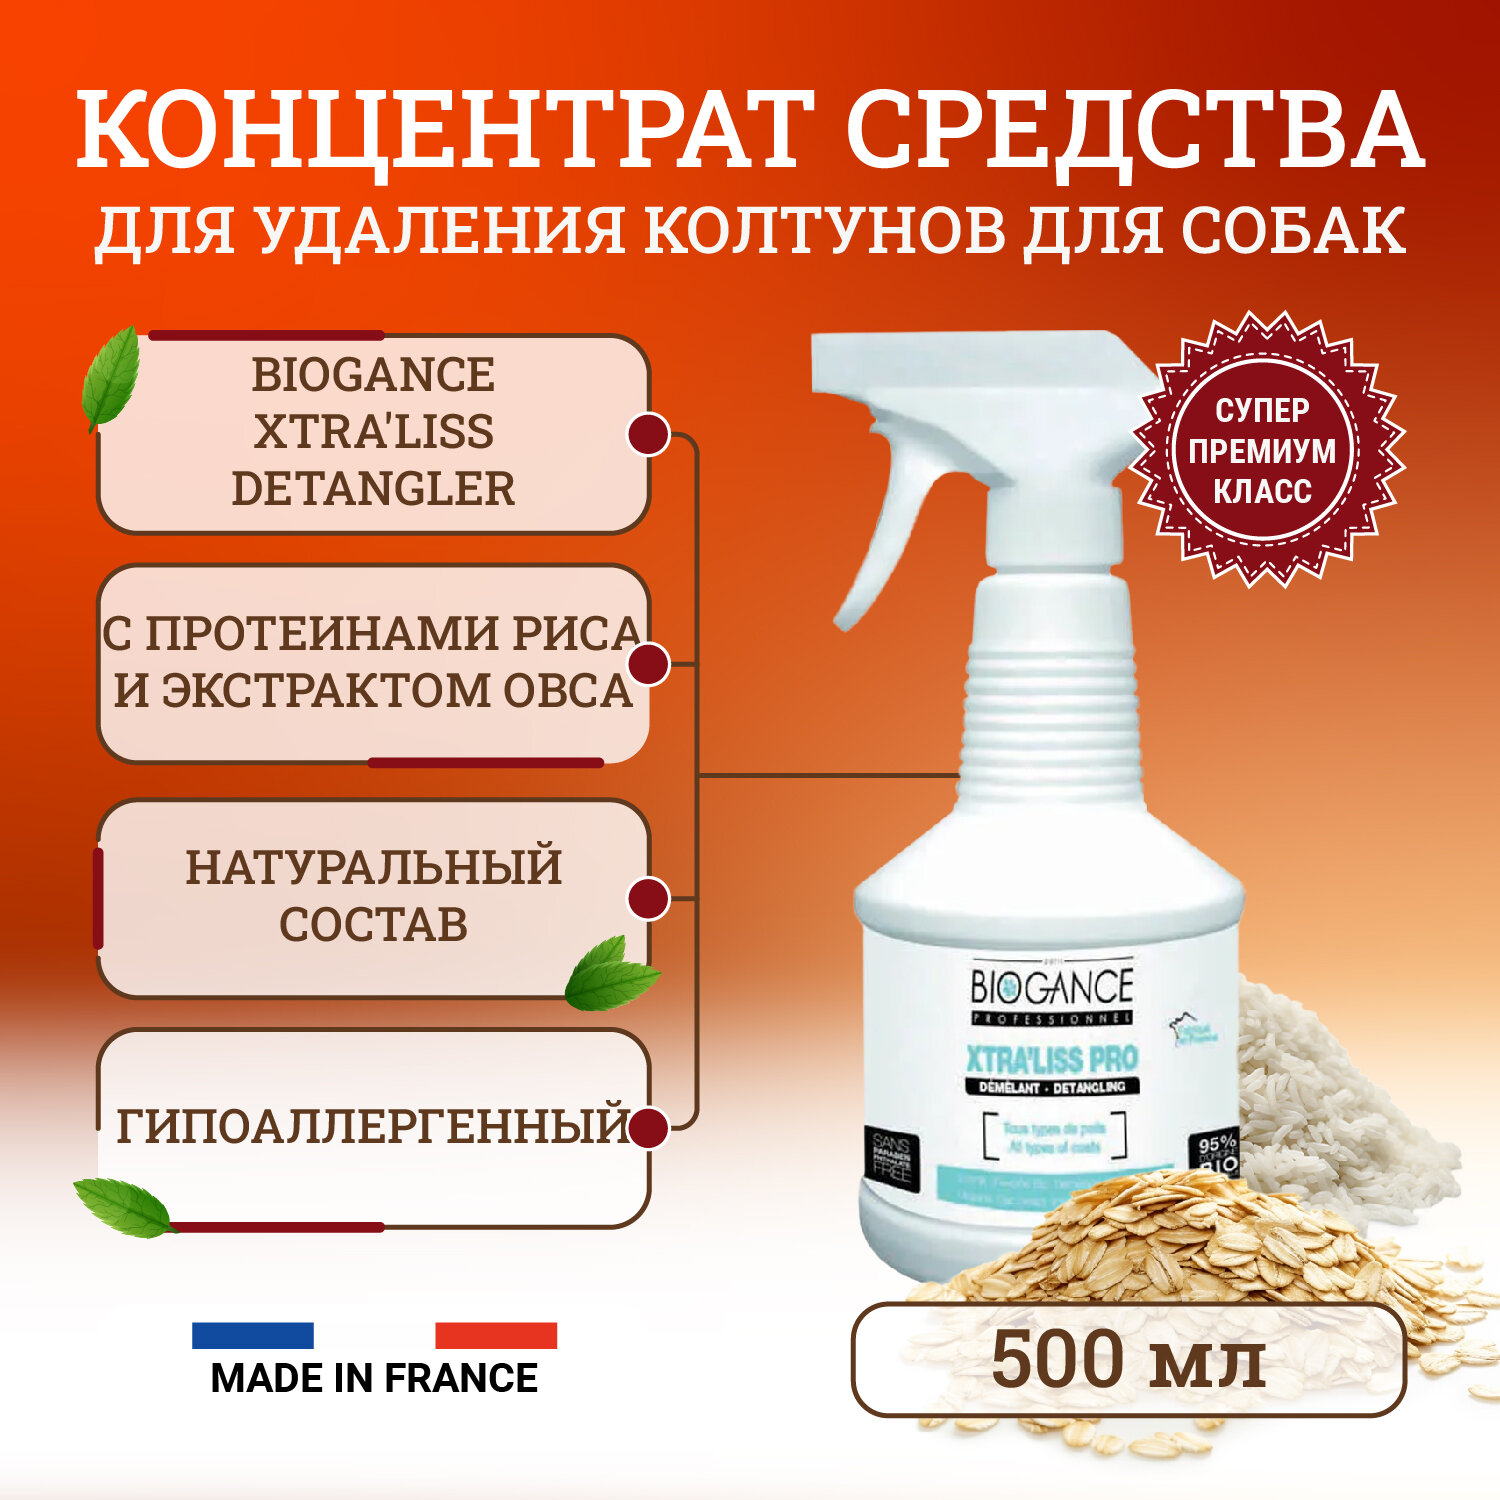 Biogance Xtra Liss Pro Demelant средство против колтунов - 500 мл